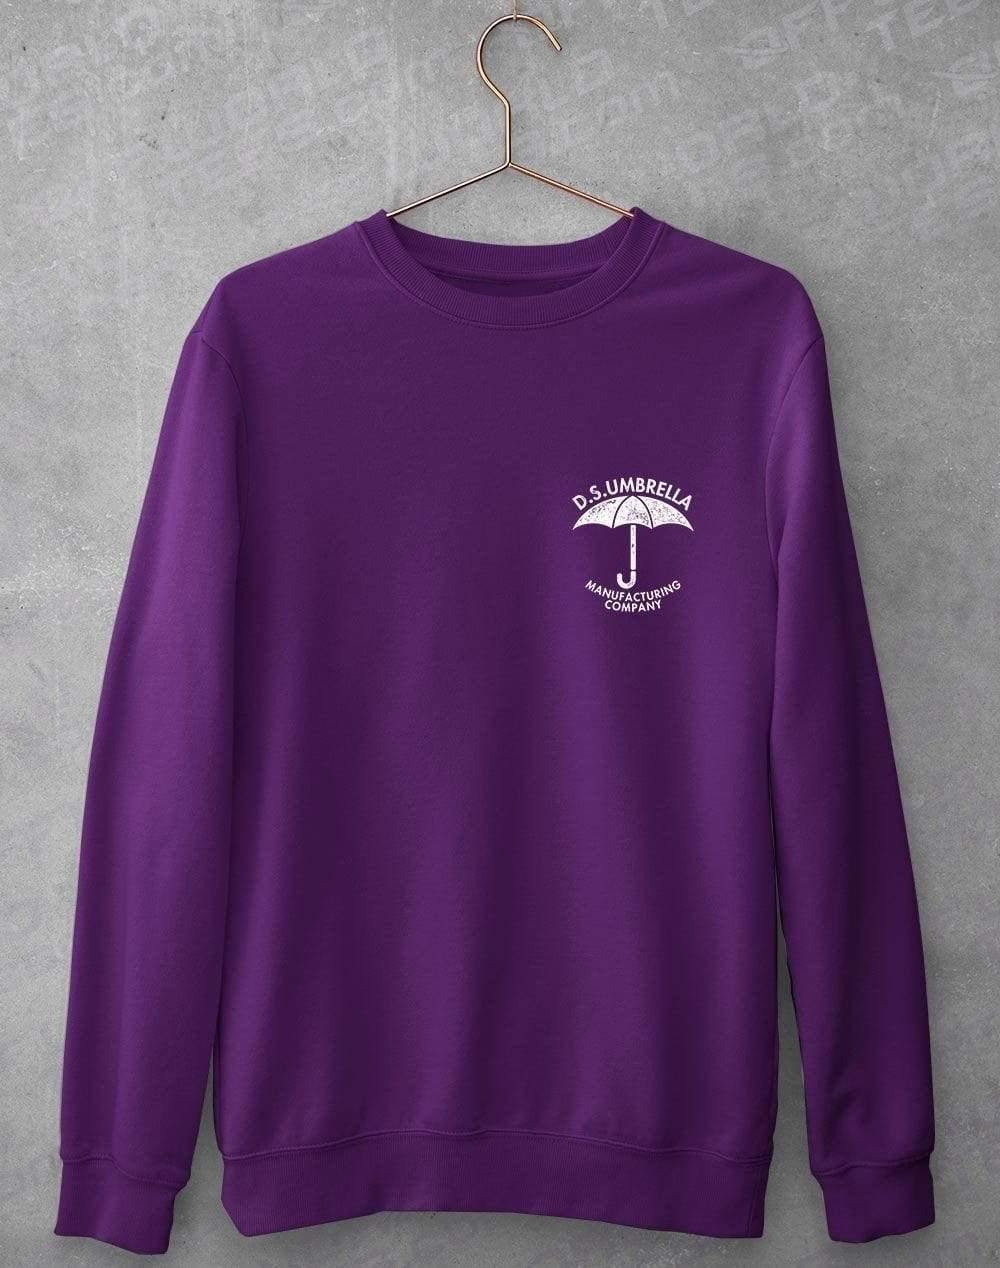 DS Umbrella Sweatshirt S / Purple  - Off World Tees